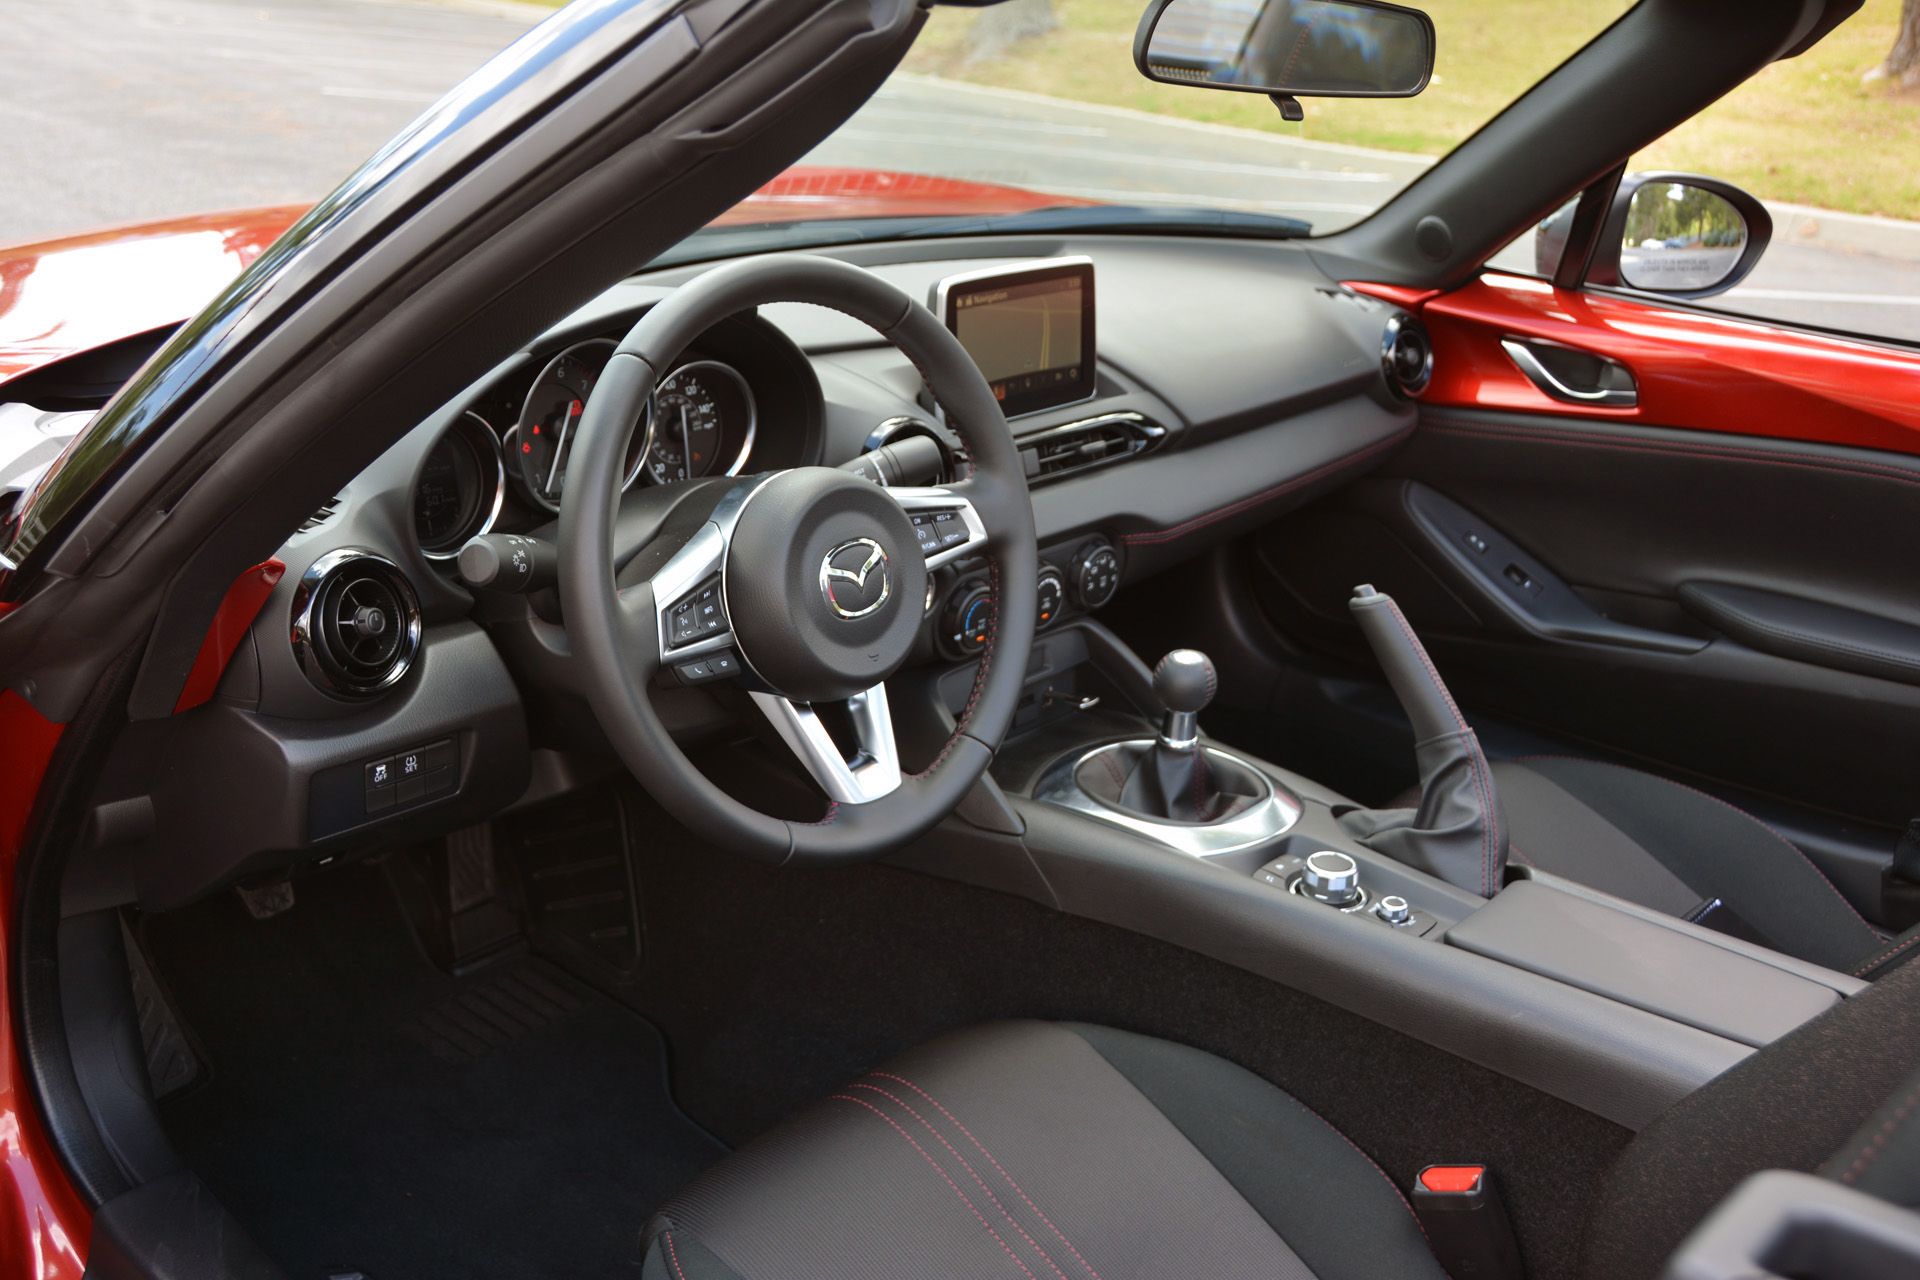 2016 Mazda MX-5 Miata - Driven